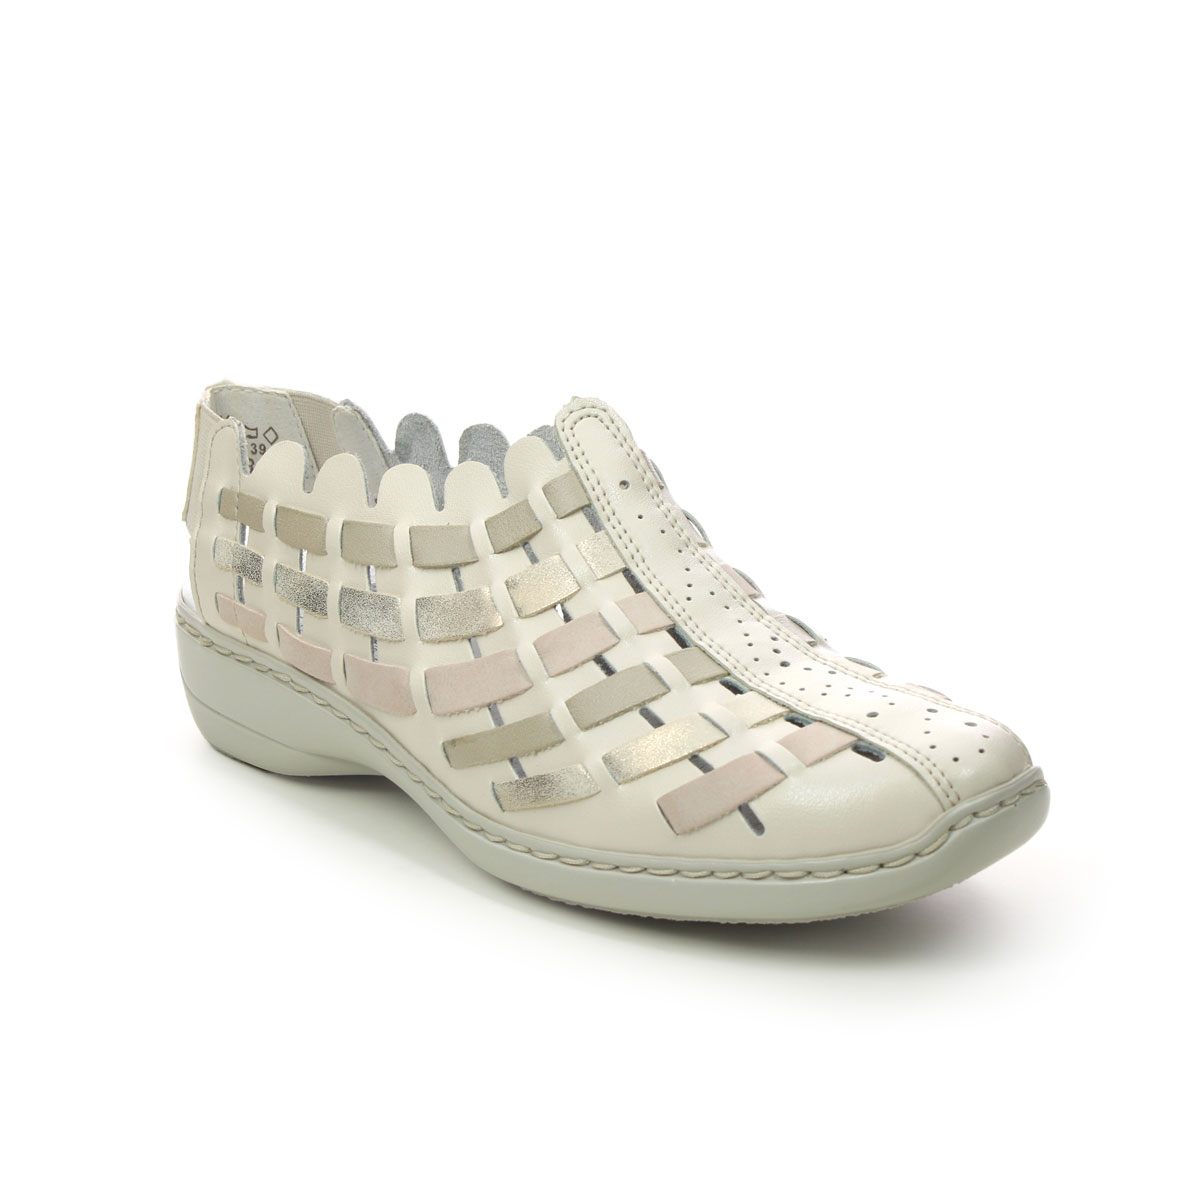 Rieker Dorsina Beige Gold Womens Closed Toe Sandals 413V8-60 In Size 40 In Plain Beige Gold